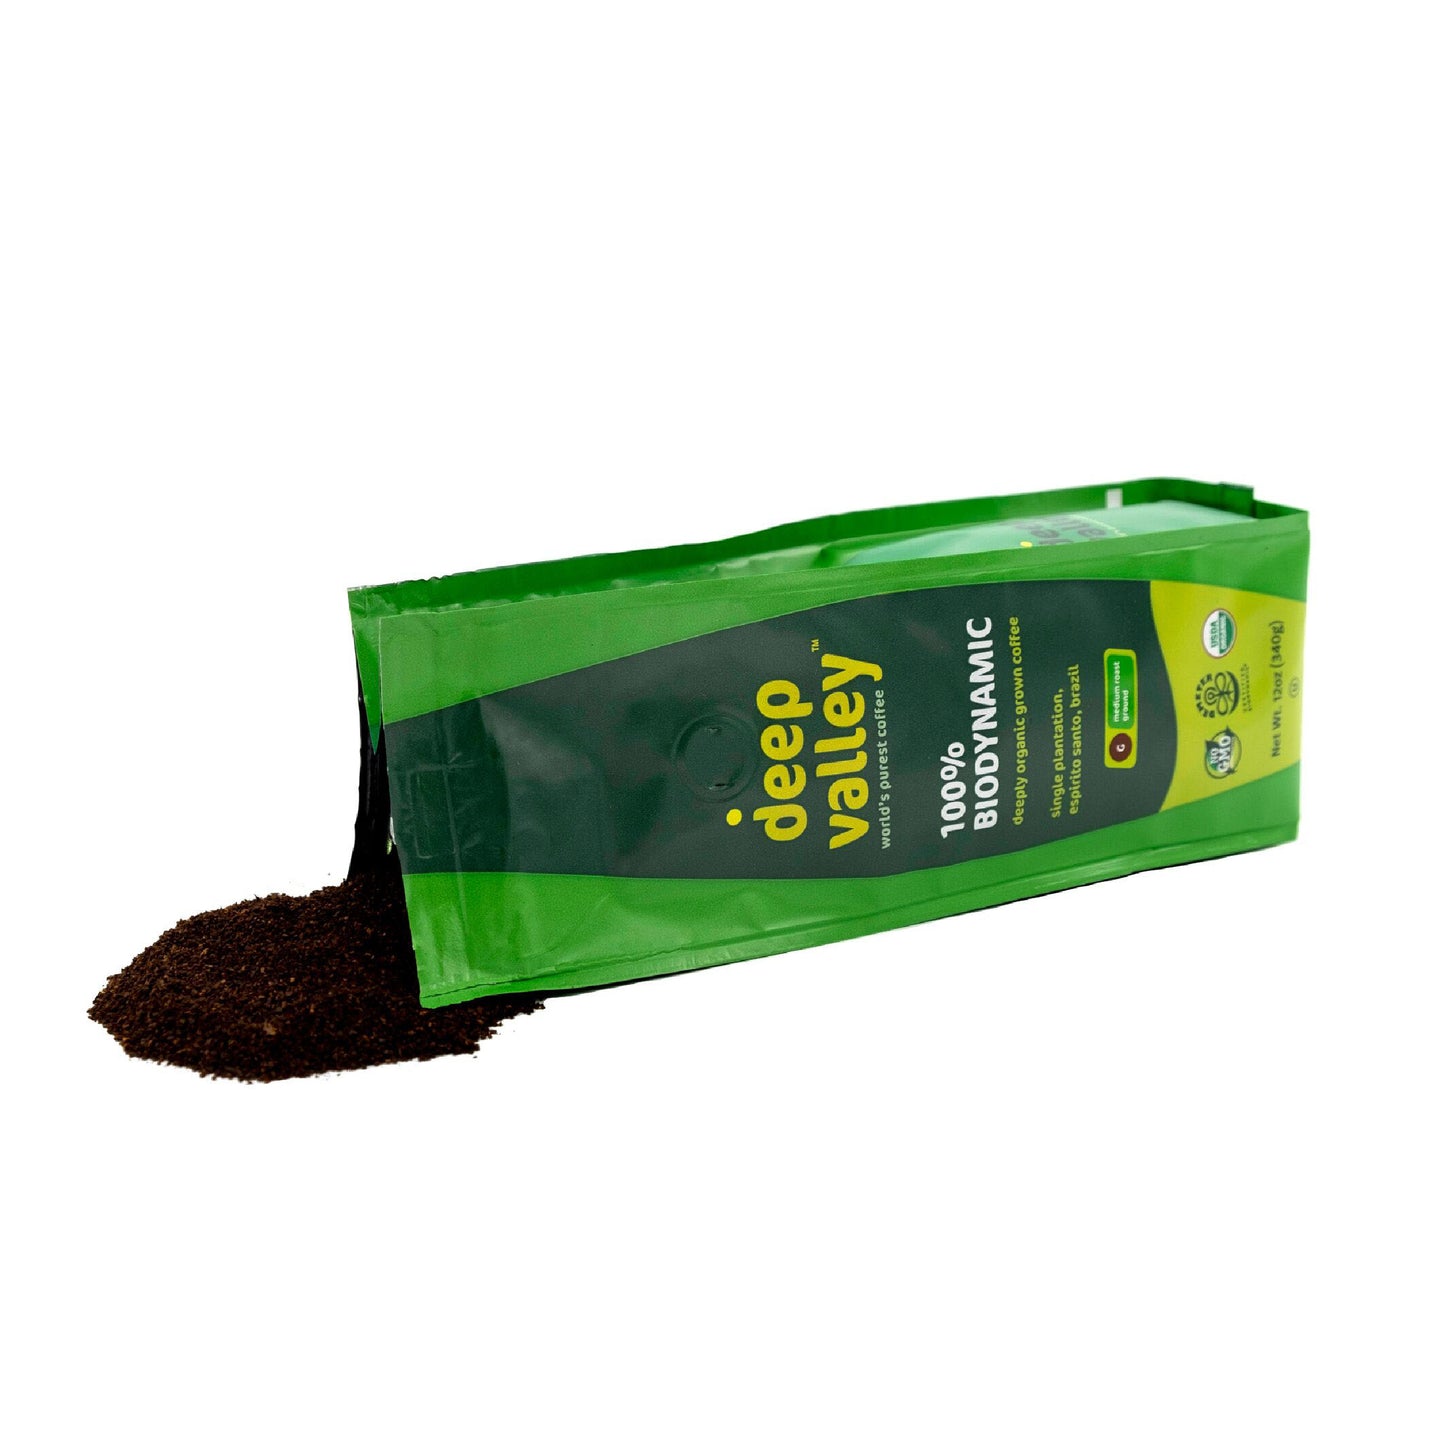 Deep Valley Biodynamic Medium Roast Coffee | 長谷生物動力有機巴西咖啡 – 中烘培